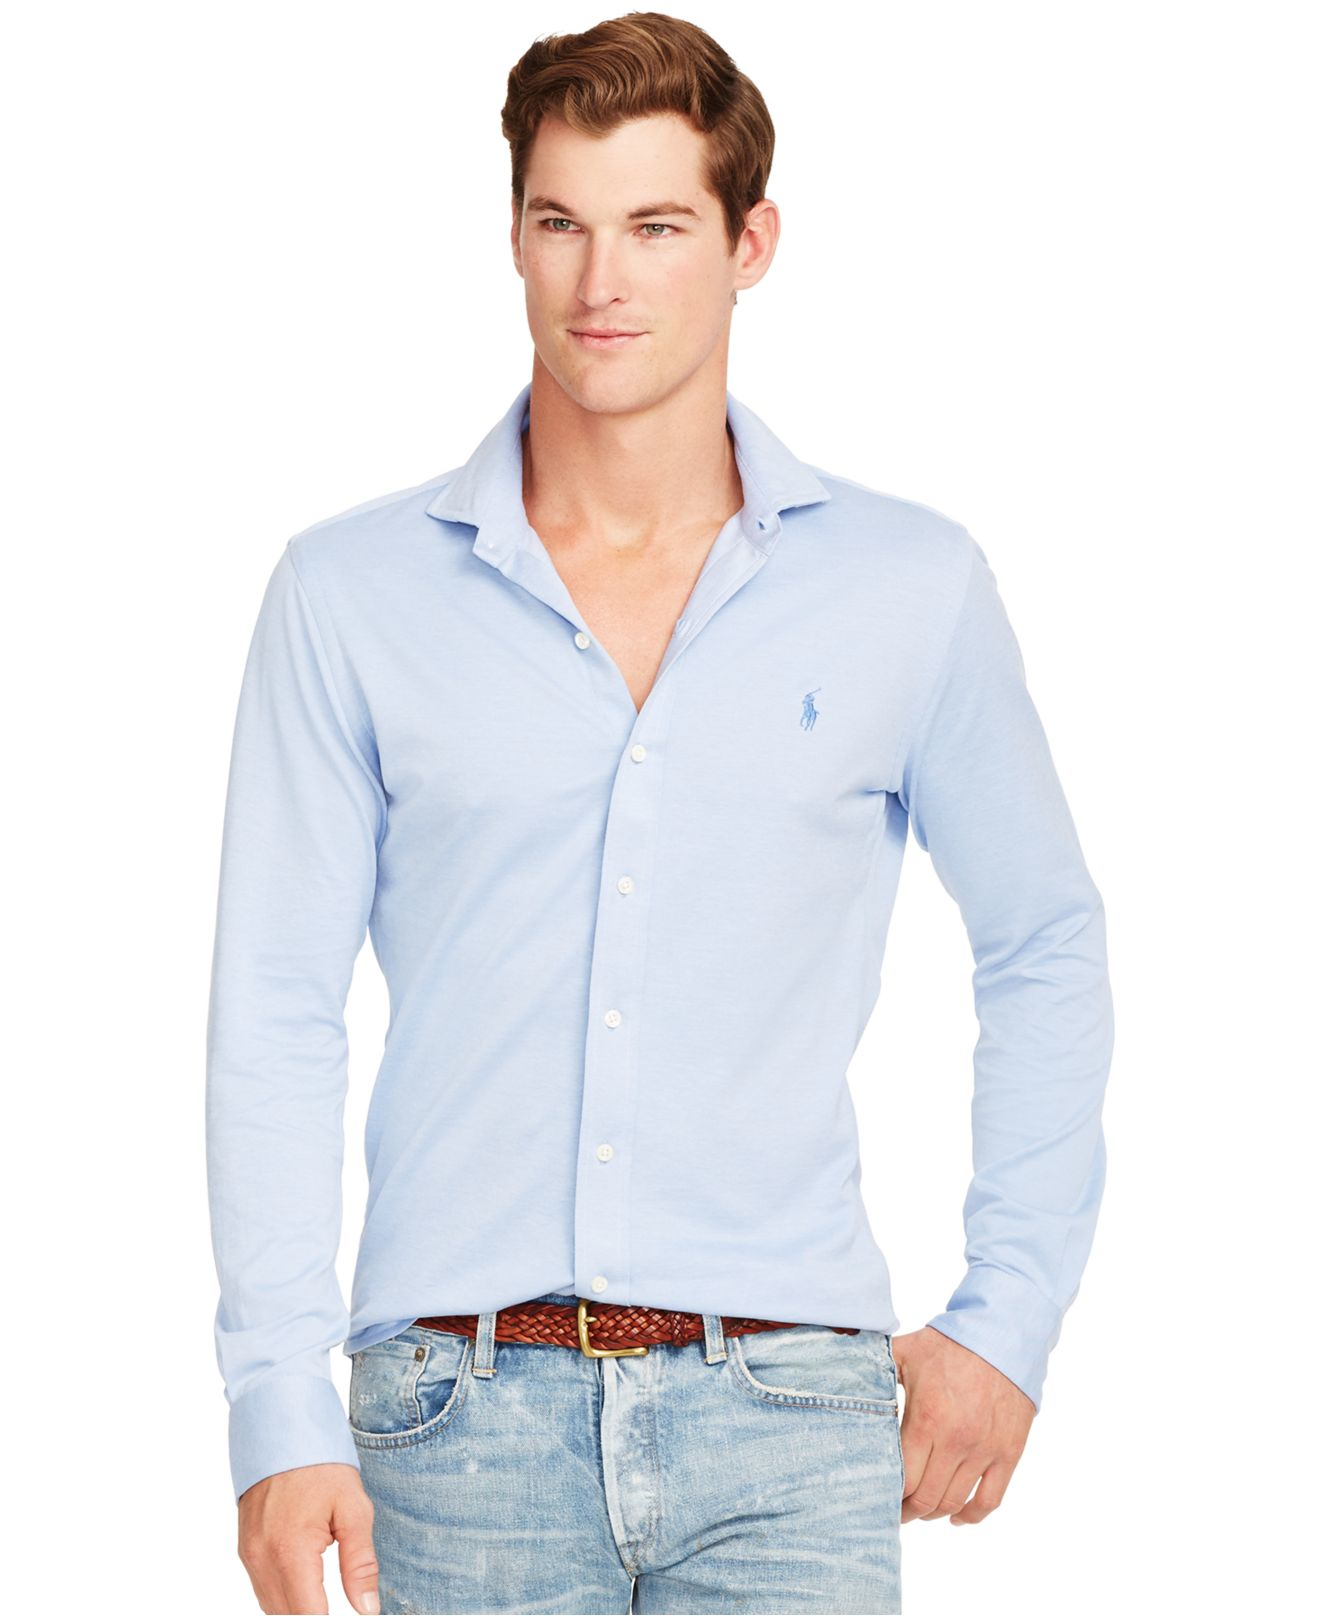 Lyst - Polo Ralph Lauren Knit Estate Dress Shirt in Blue for Men